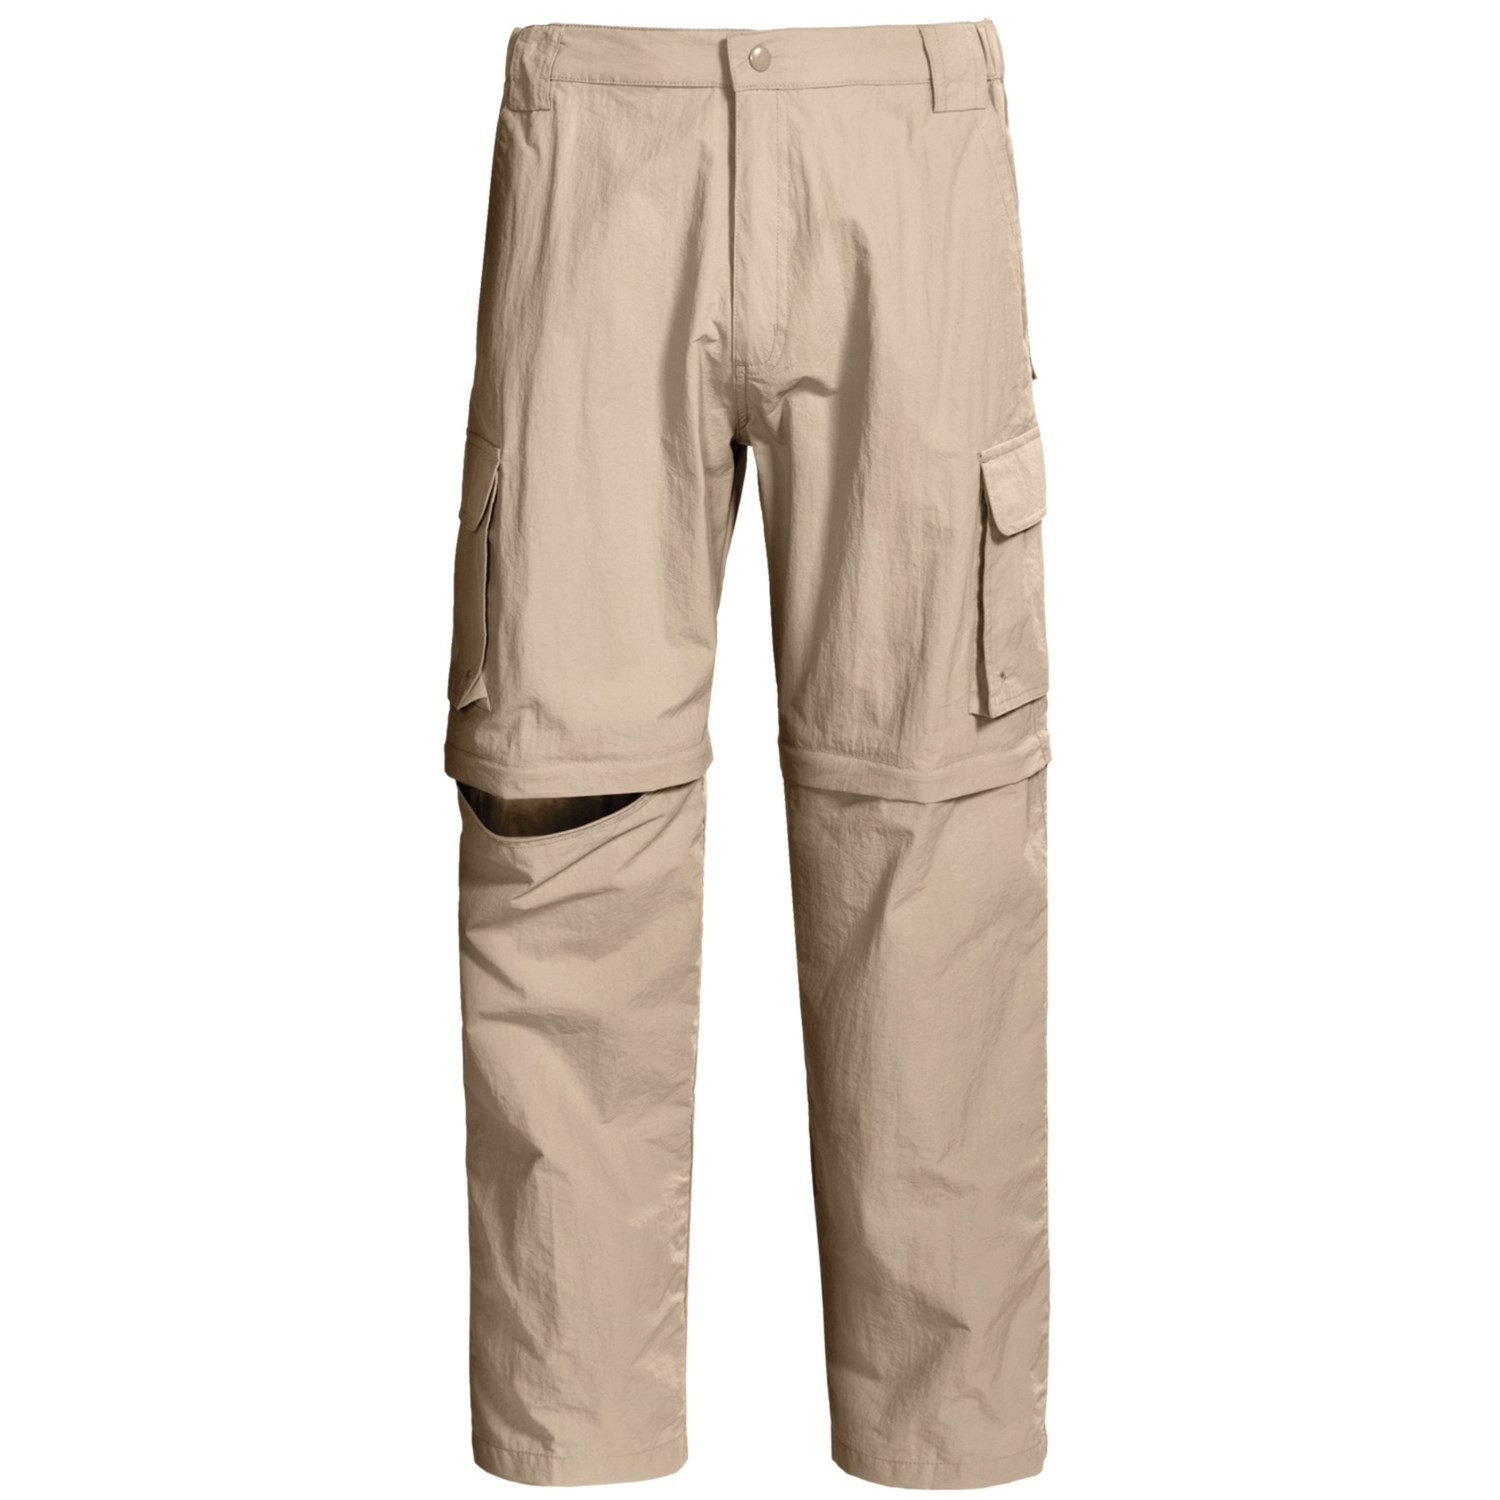 Dakota Grizzly Convertible Pants (For Men) - Save 54%